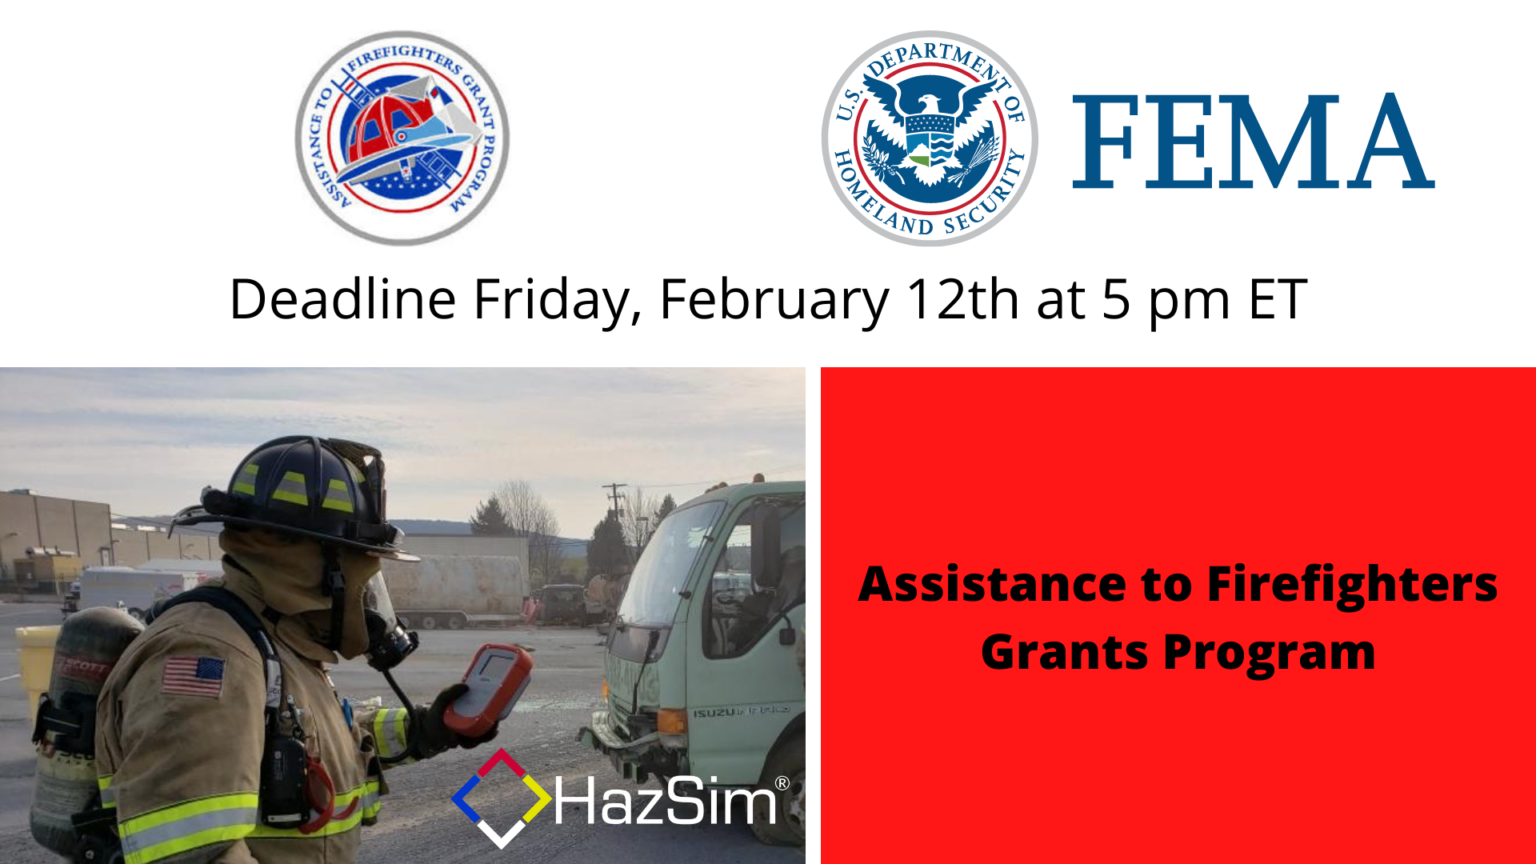 FEMA AFG Grants Deadline for applications February 12th at 5 PM ET